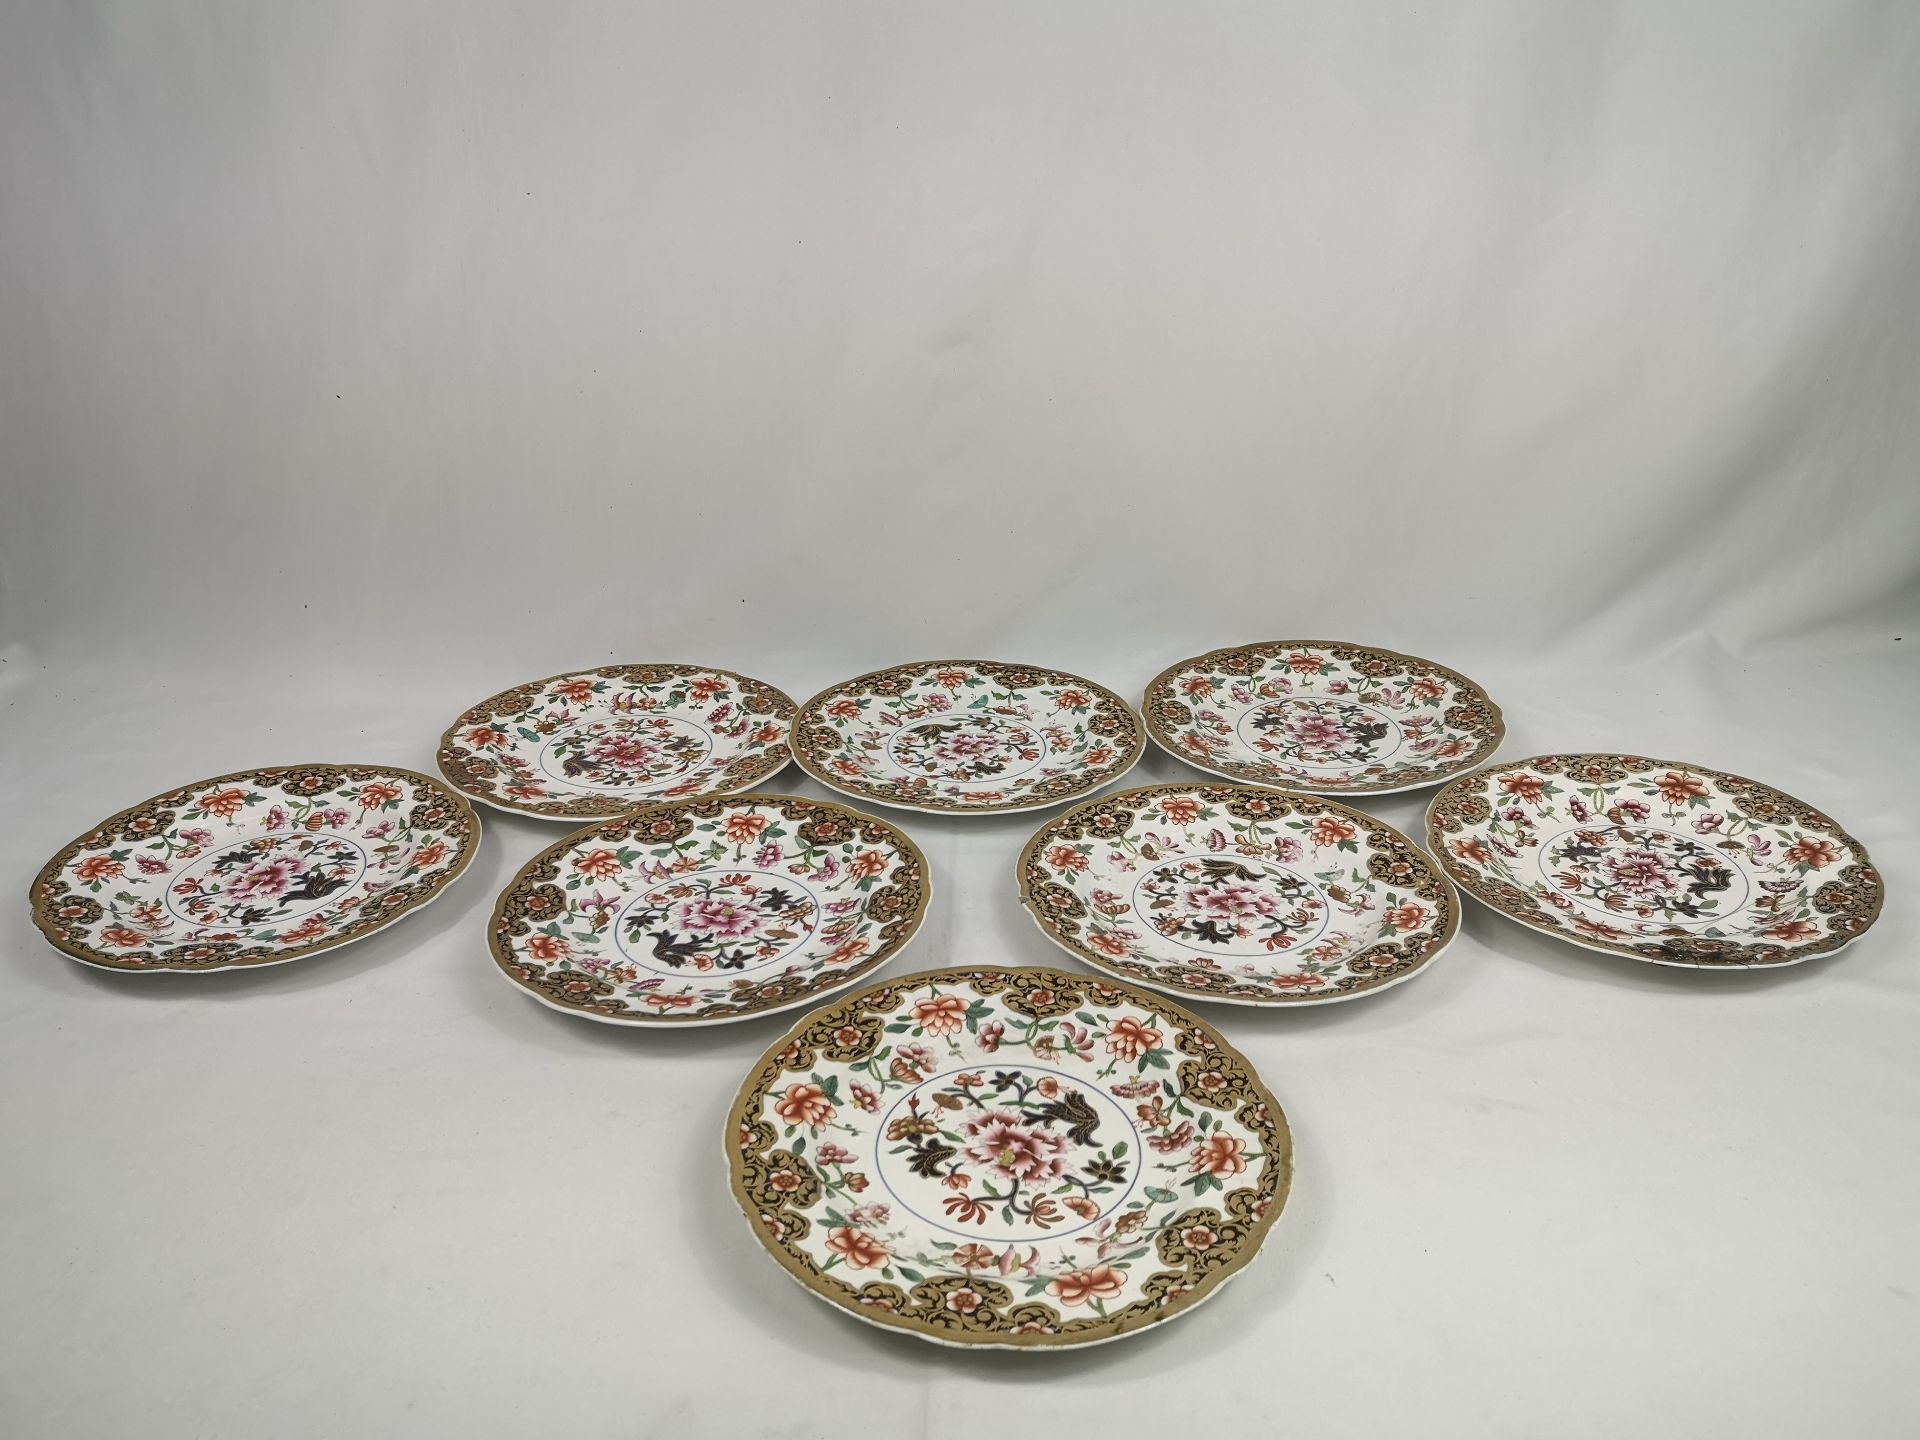 Eight 19th century Spode plates